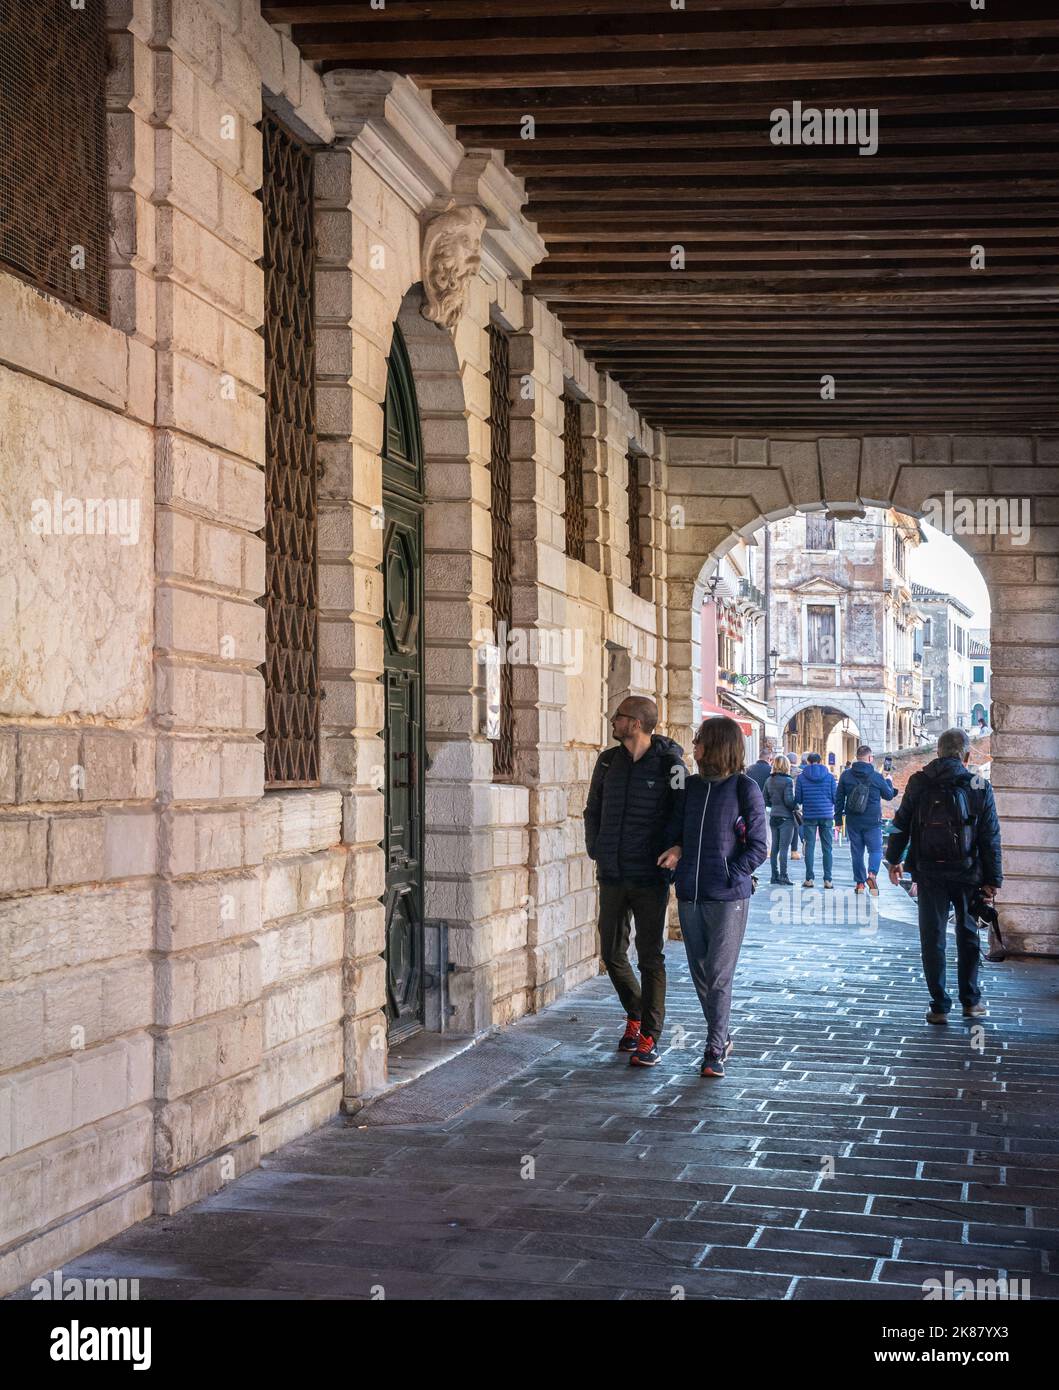 Street in the historic town of Chioggia, Venetian lagoon, Veneto region, northern Italy - people walking Stock Photo